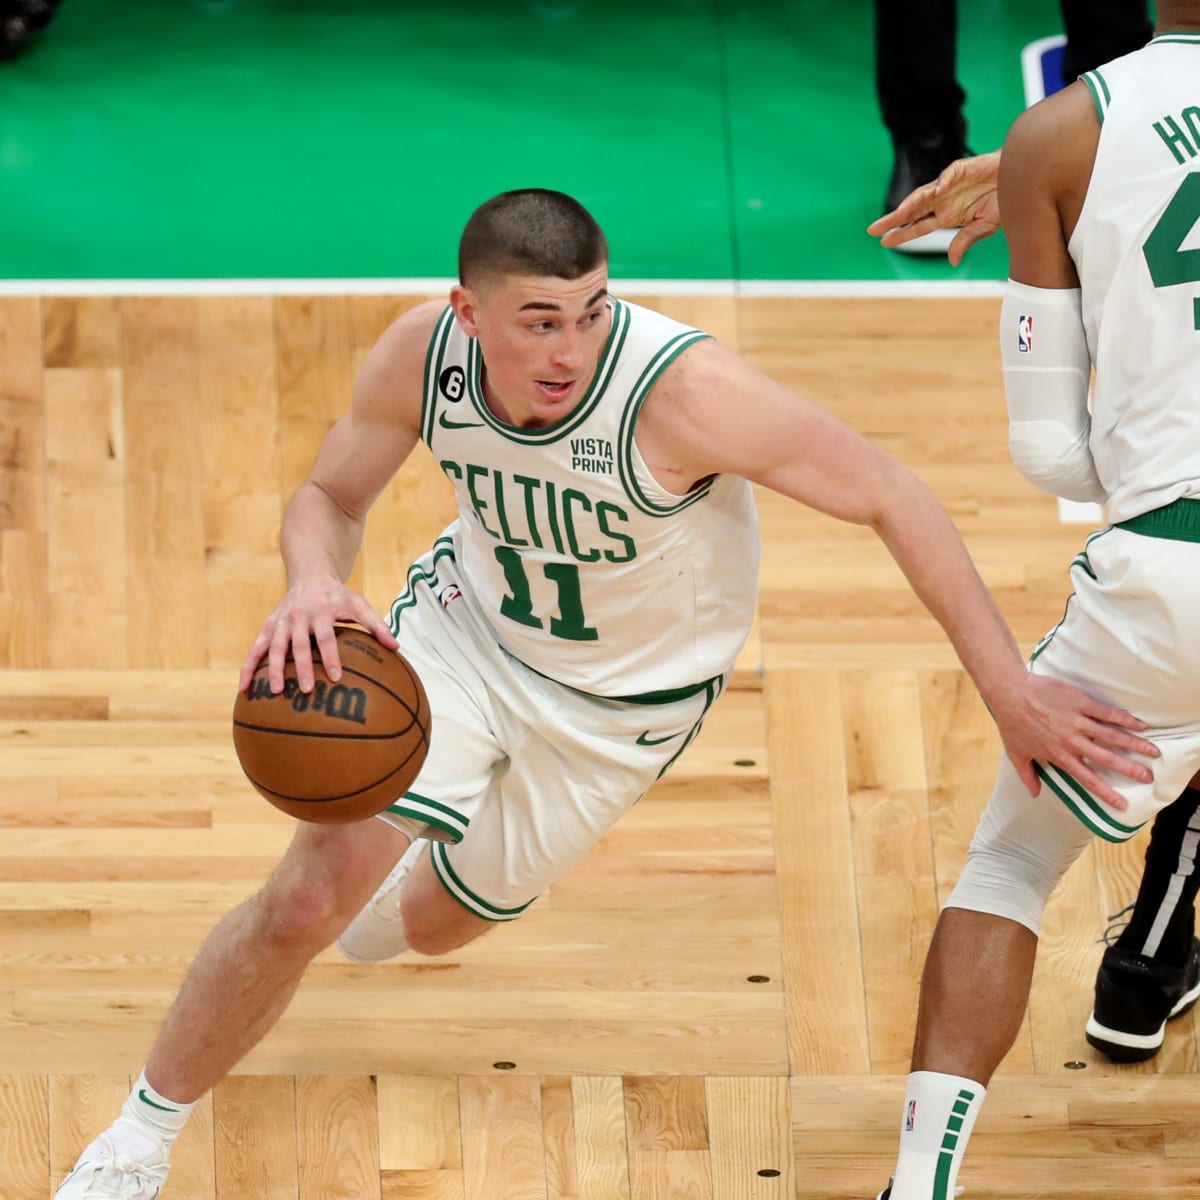 Celtics' Owner Wyc Grousbeck Hints Toward WNBA Team in Boston